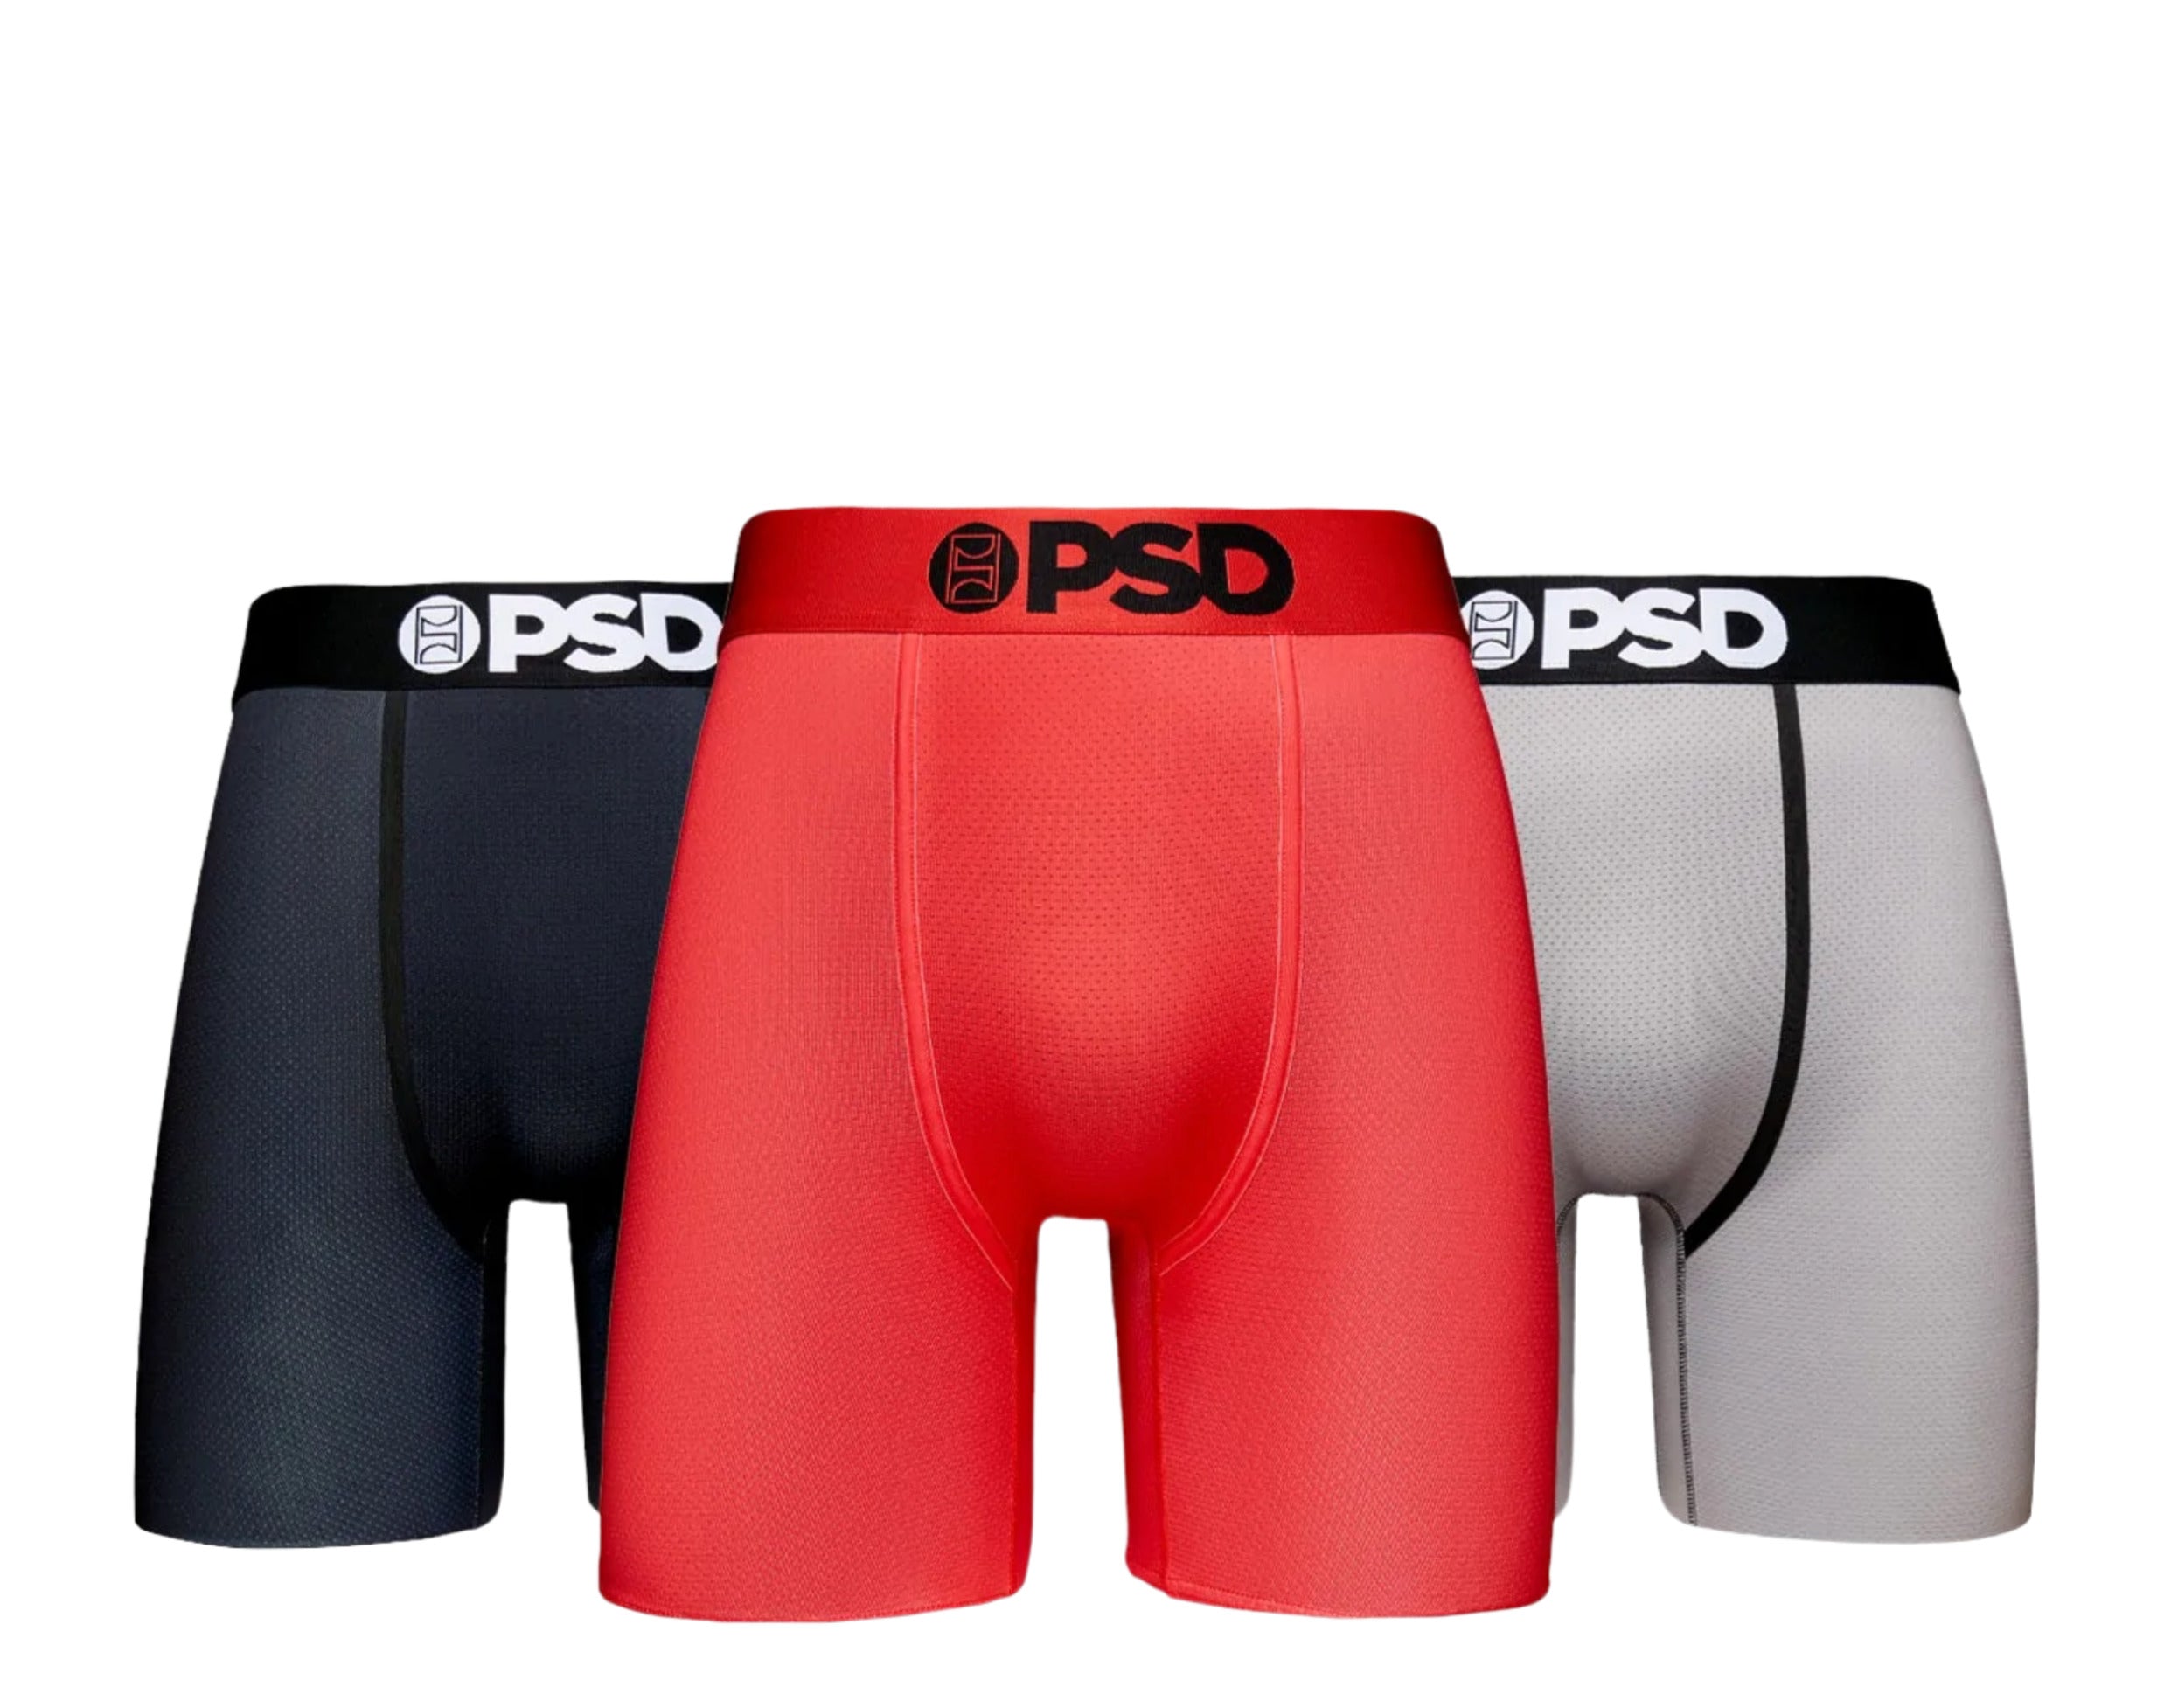 Men's 3-Pack Boxer Briefs, Men's Underwear